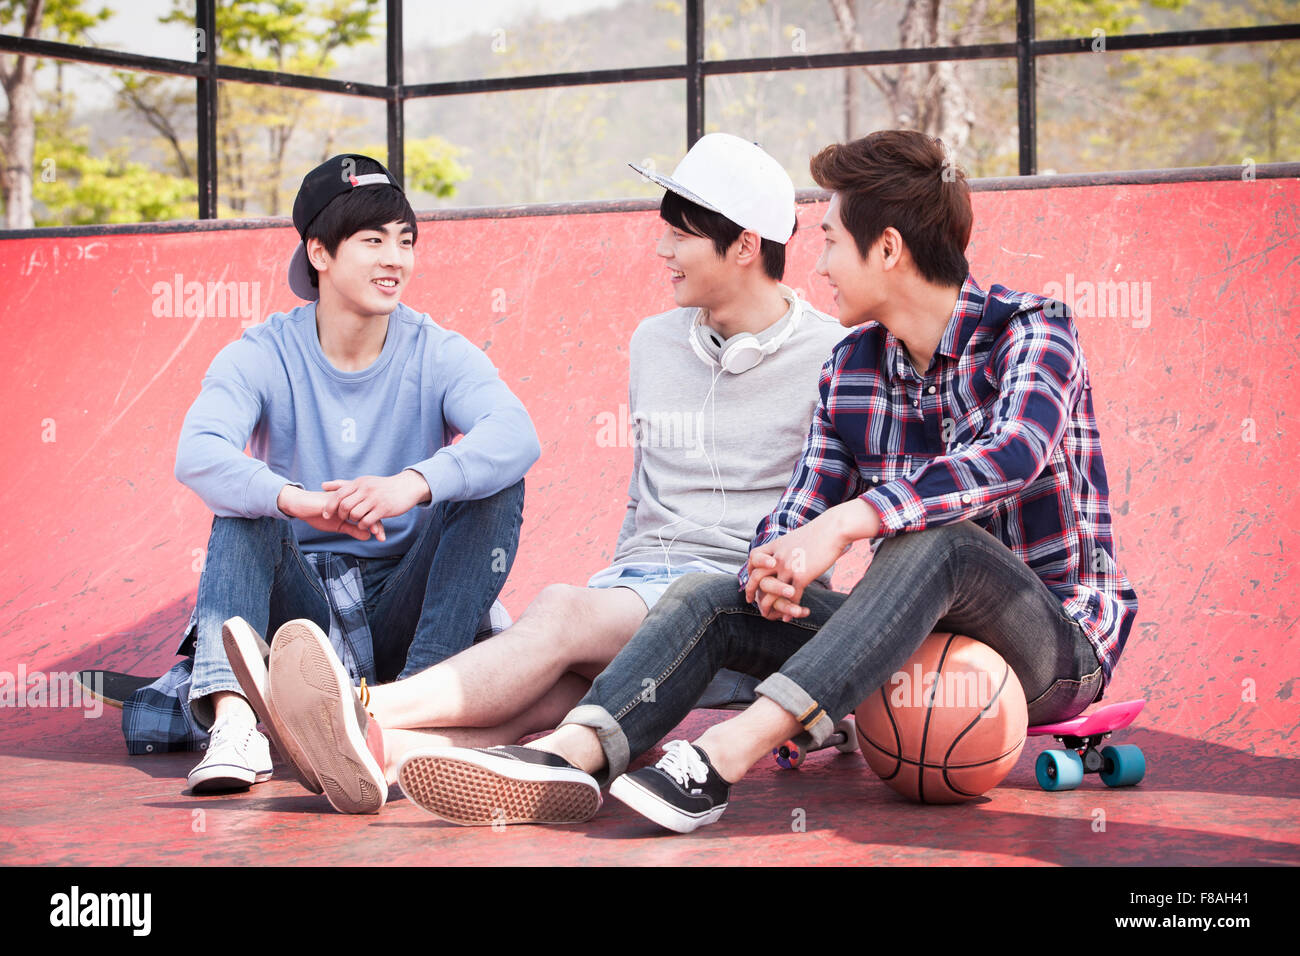 Three men sitting down on the skateboard court Stock Photo